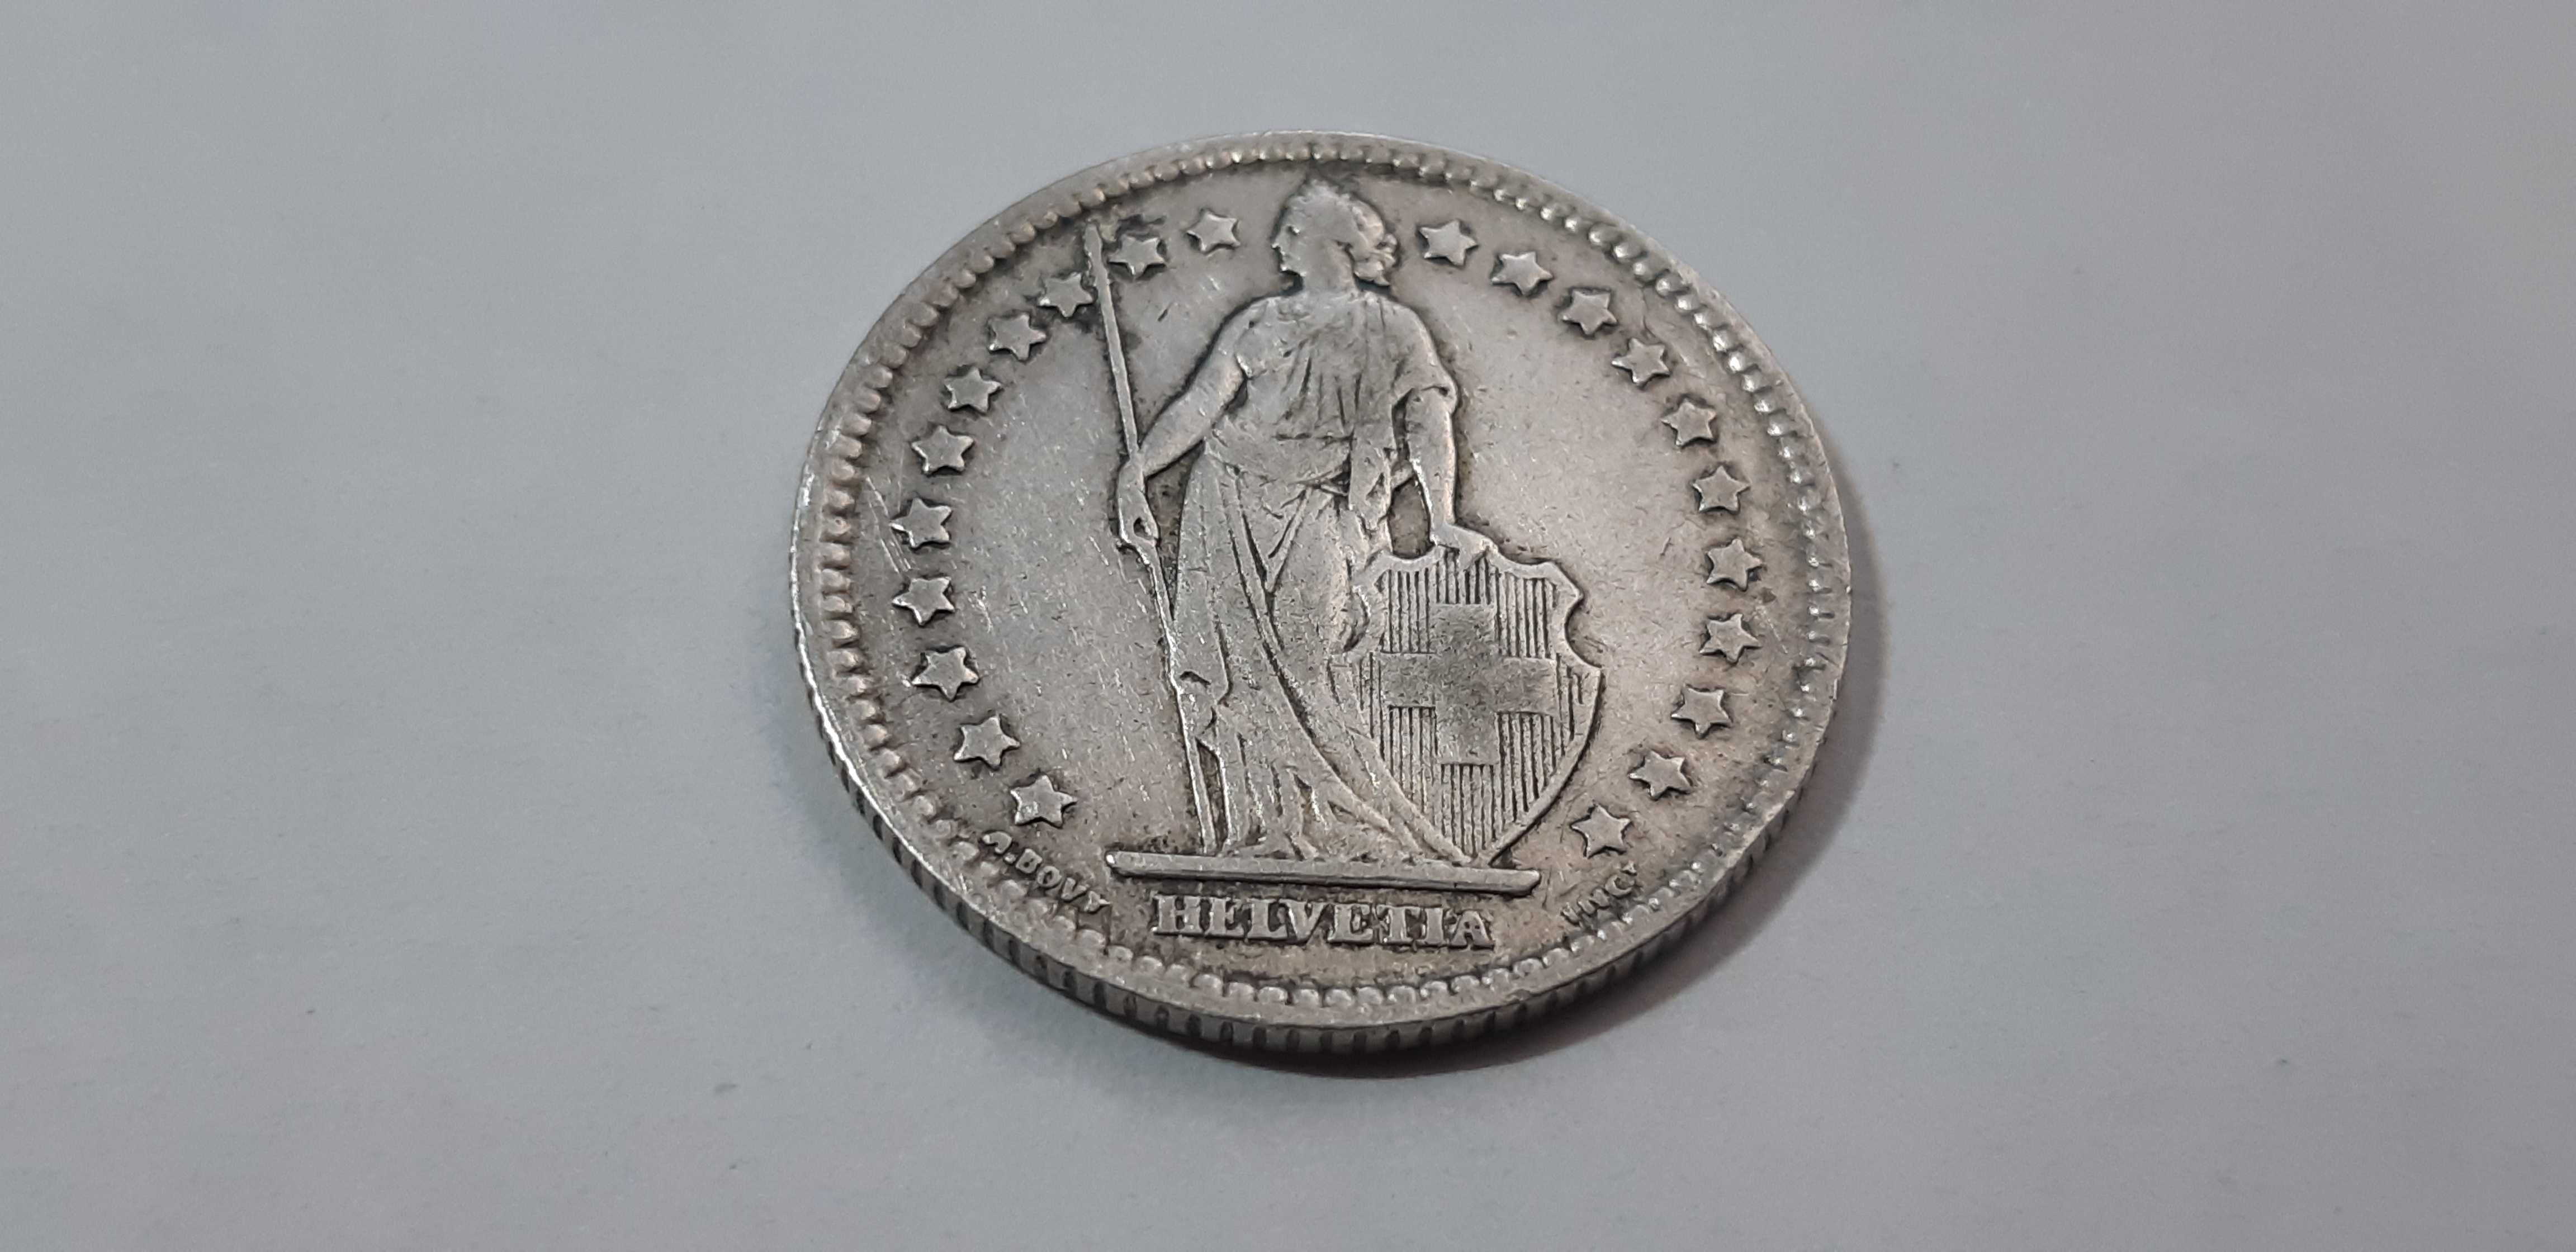 Szwajcaria 1 frank 1911 rok - srebro -  real foto